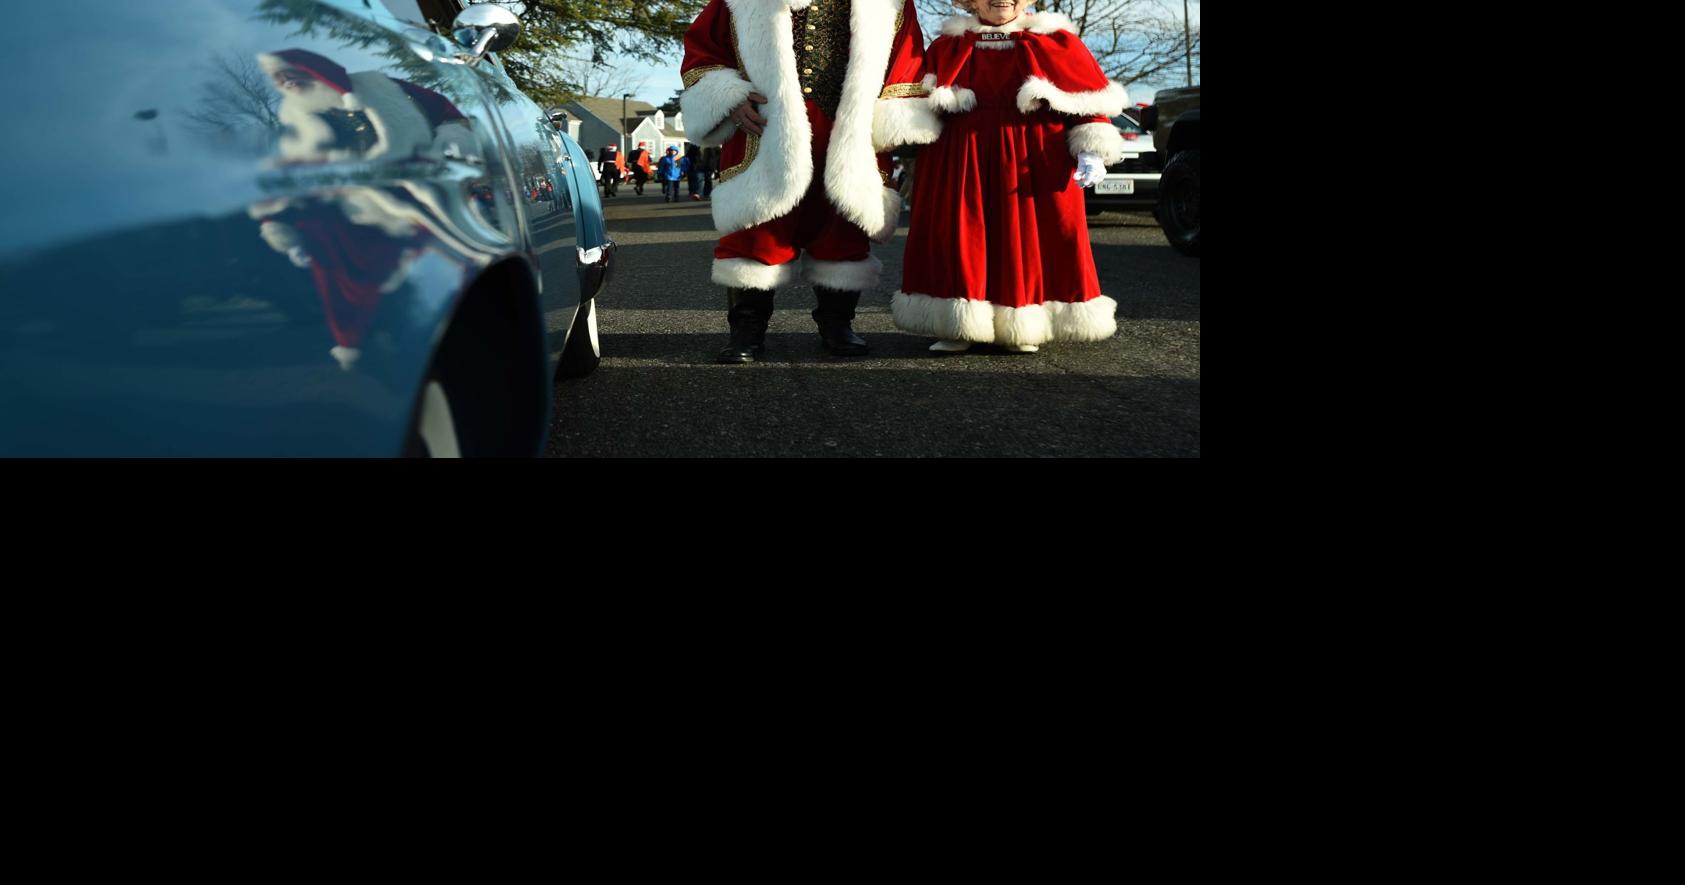 PHOTOS The Lynchburg Christmas Parade